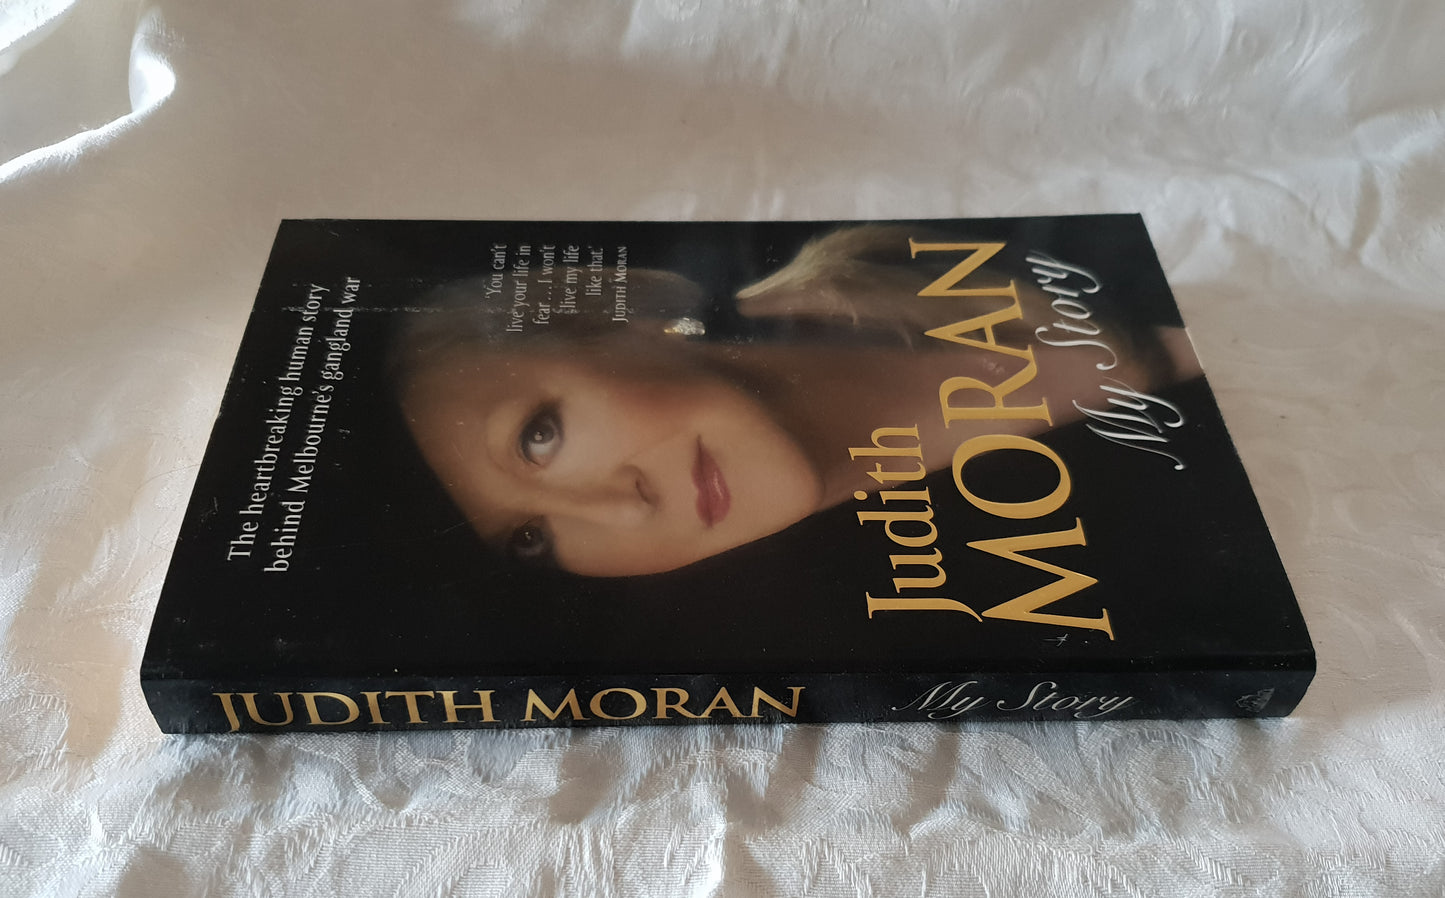 My Story by Judith Moran